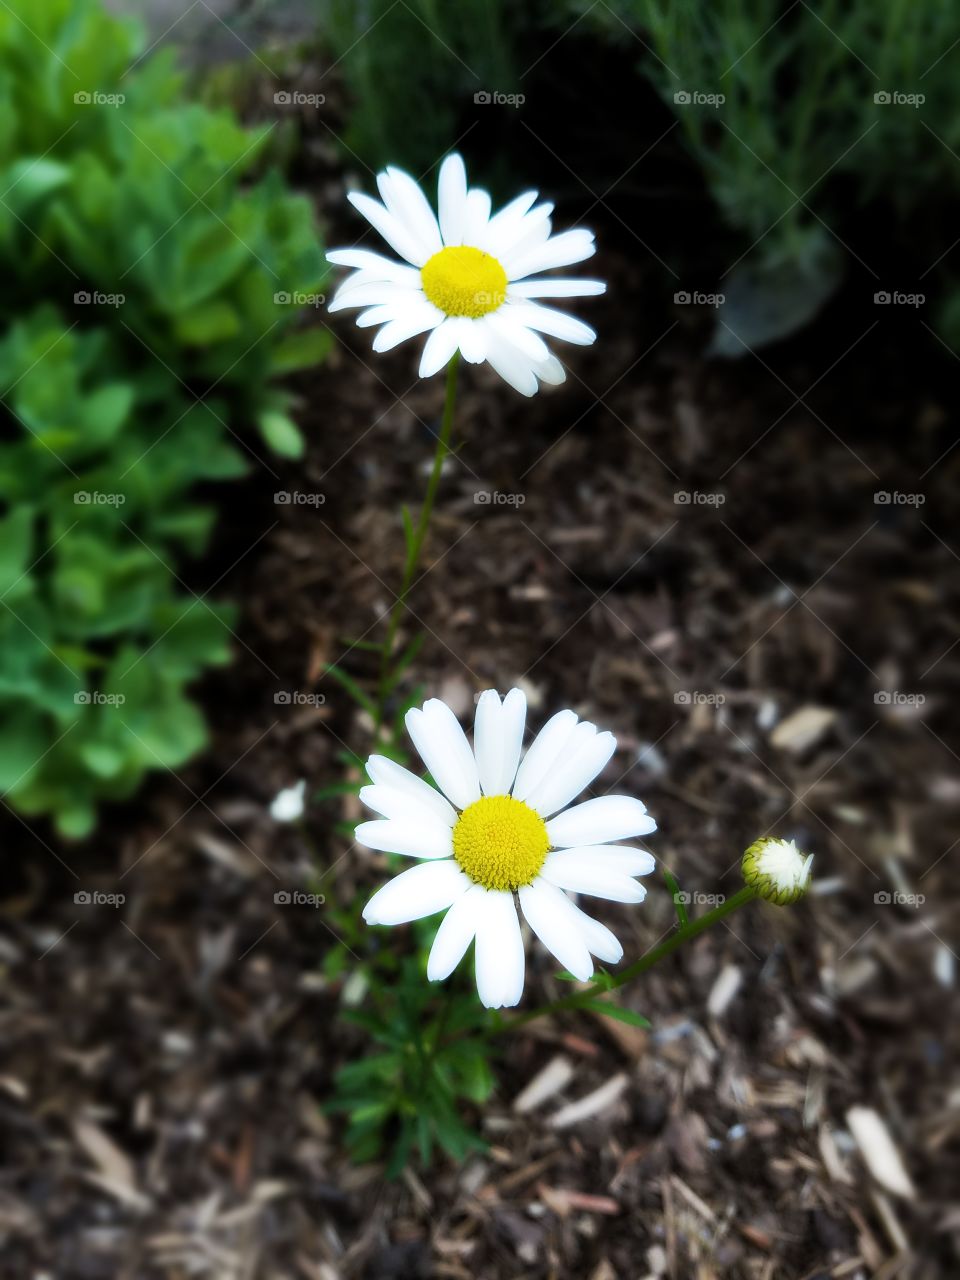 Daisy blur